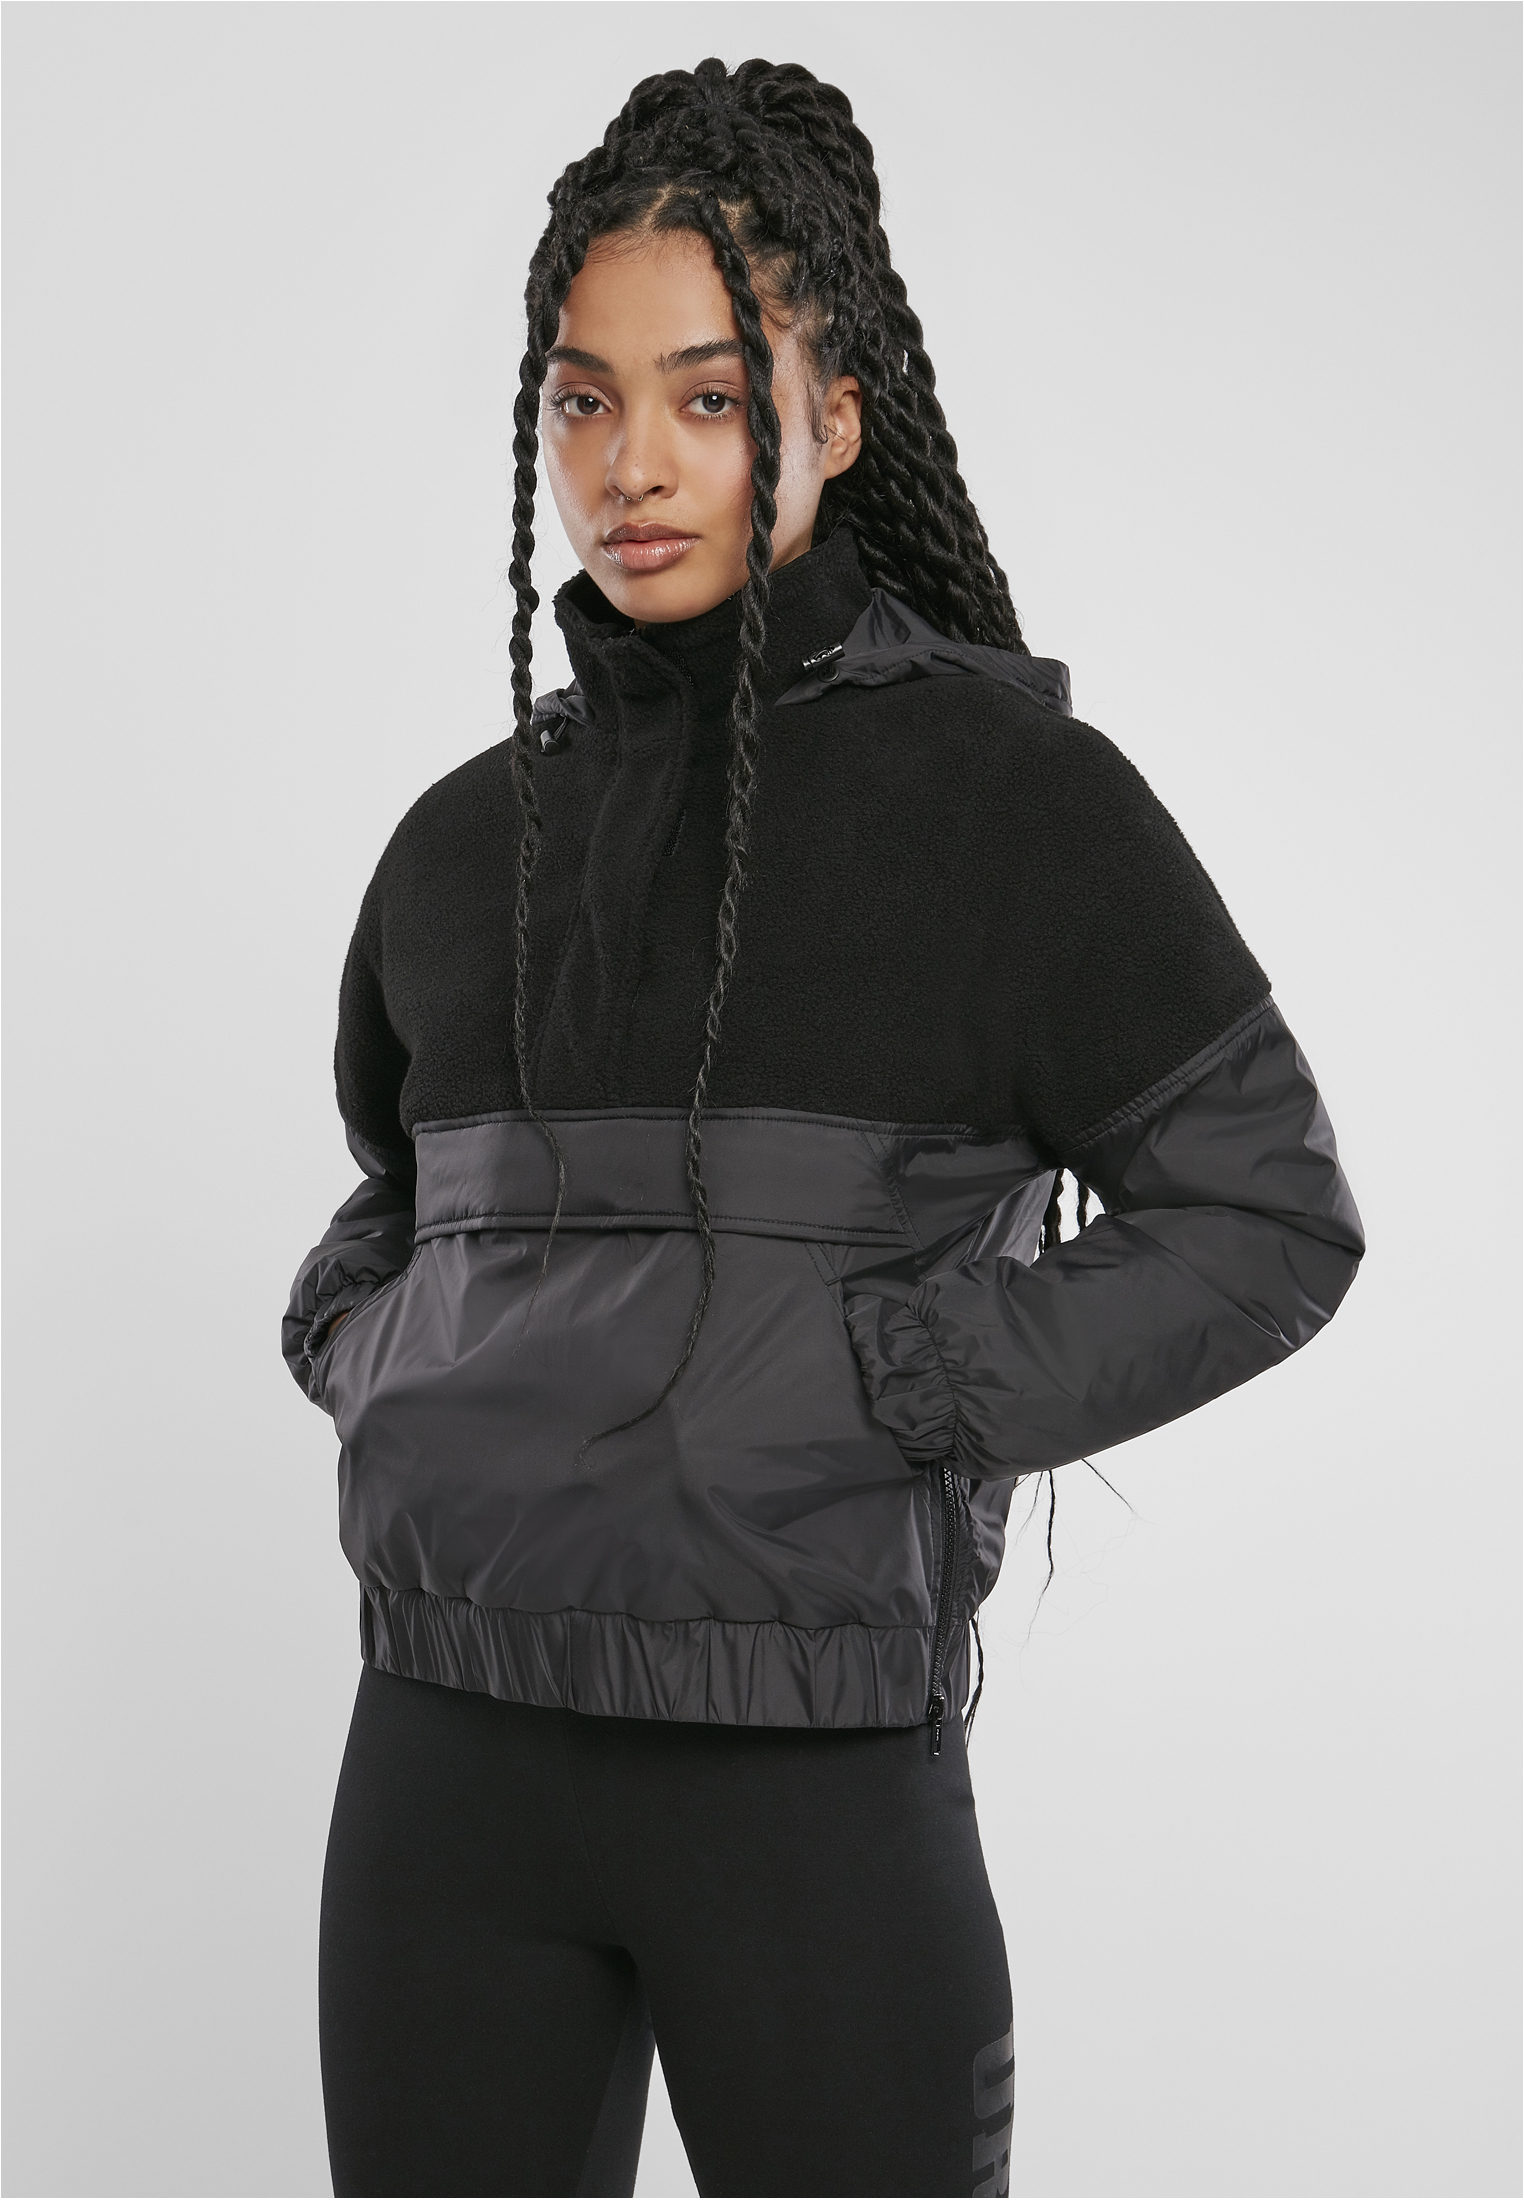 Women's Compression Jacket Sherpa Mix Black/black